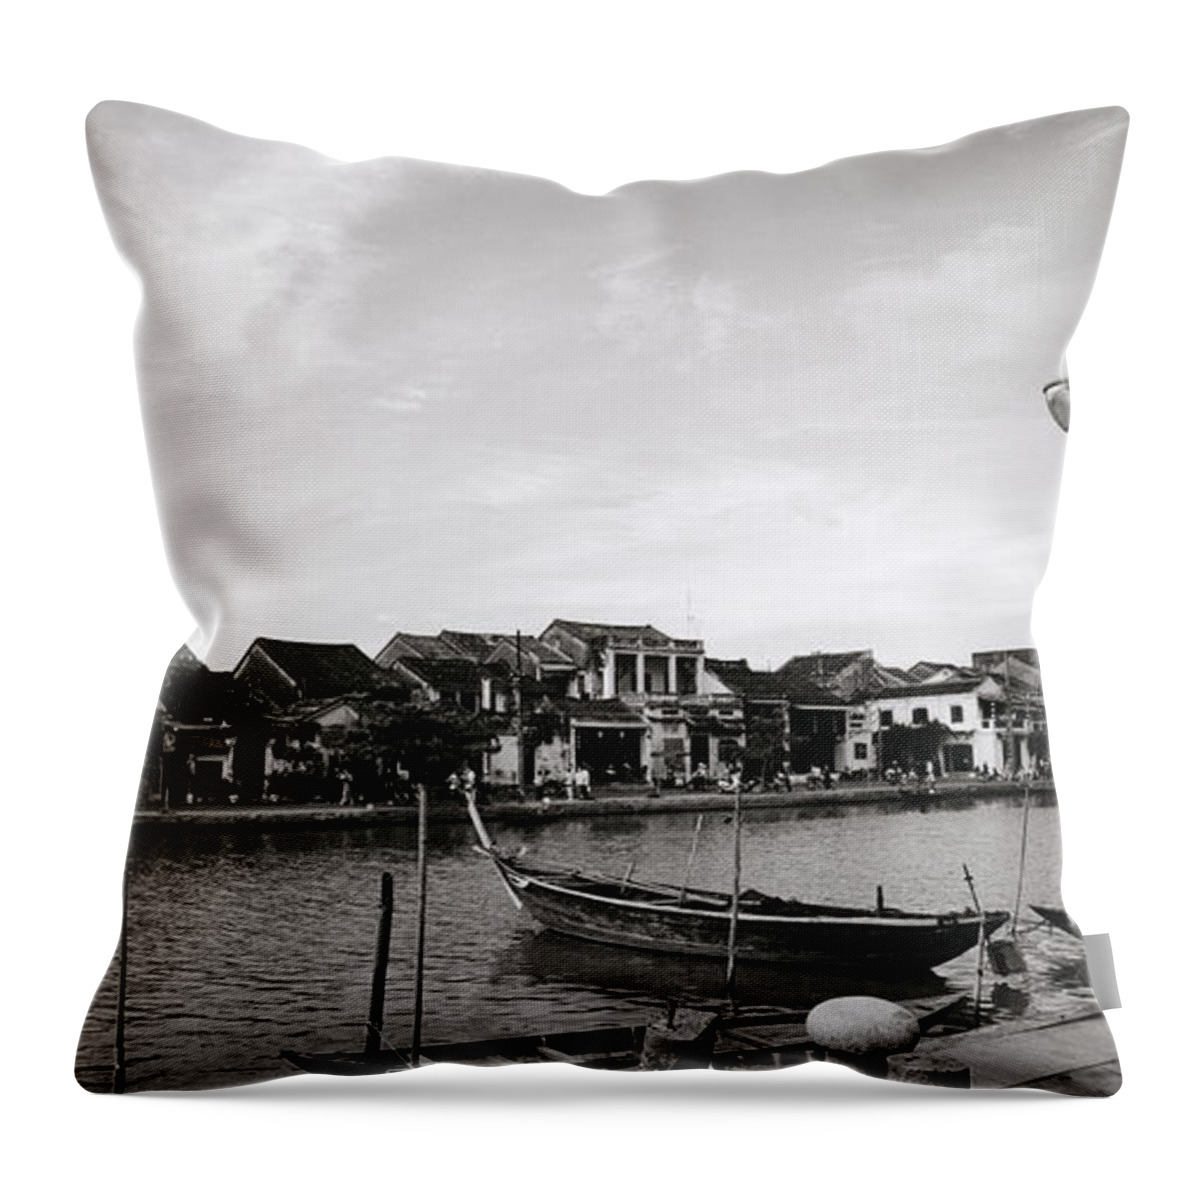 River Throw Pillow featuring the photograph Evocative Hoi An by Shaun Higson